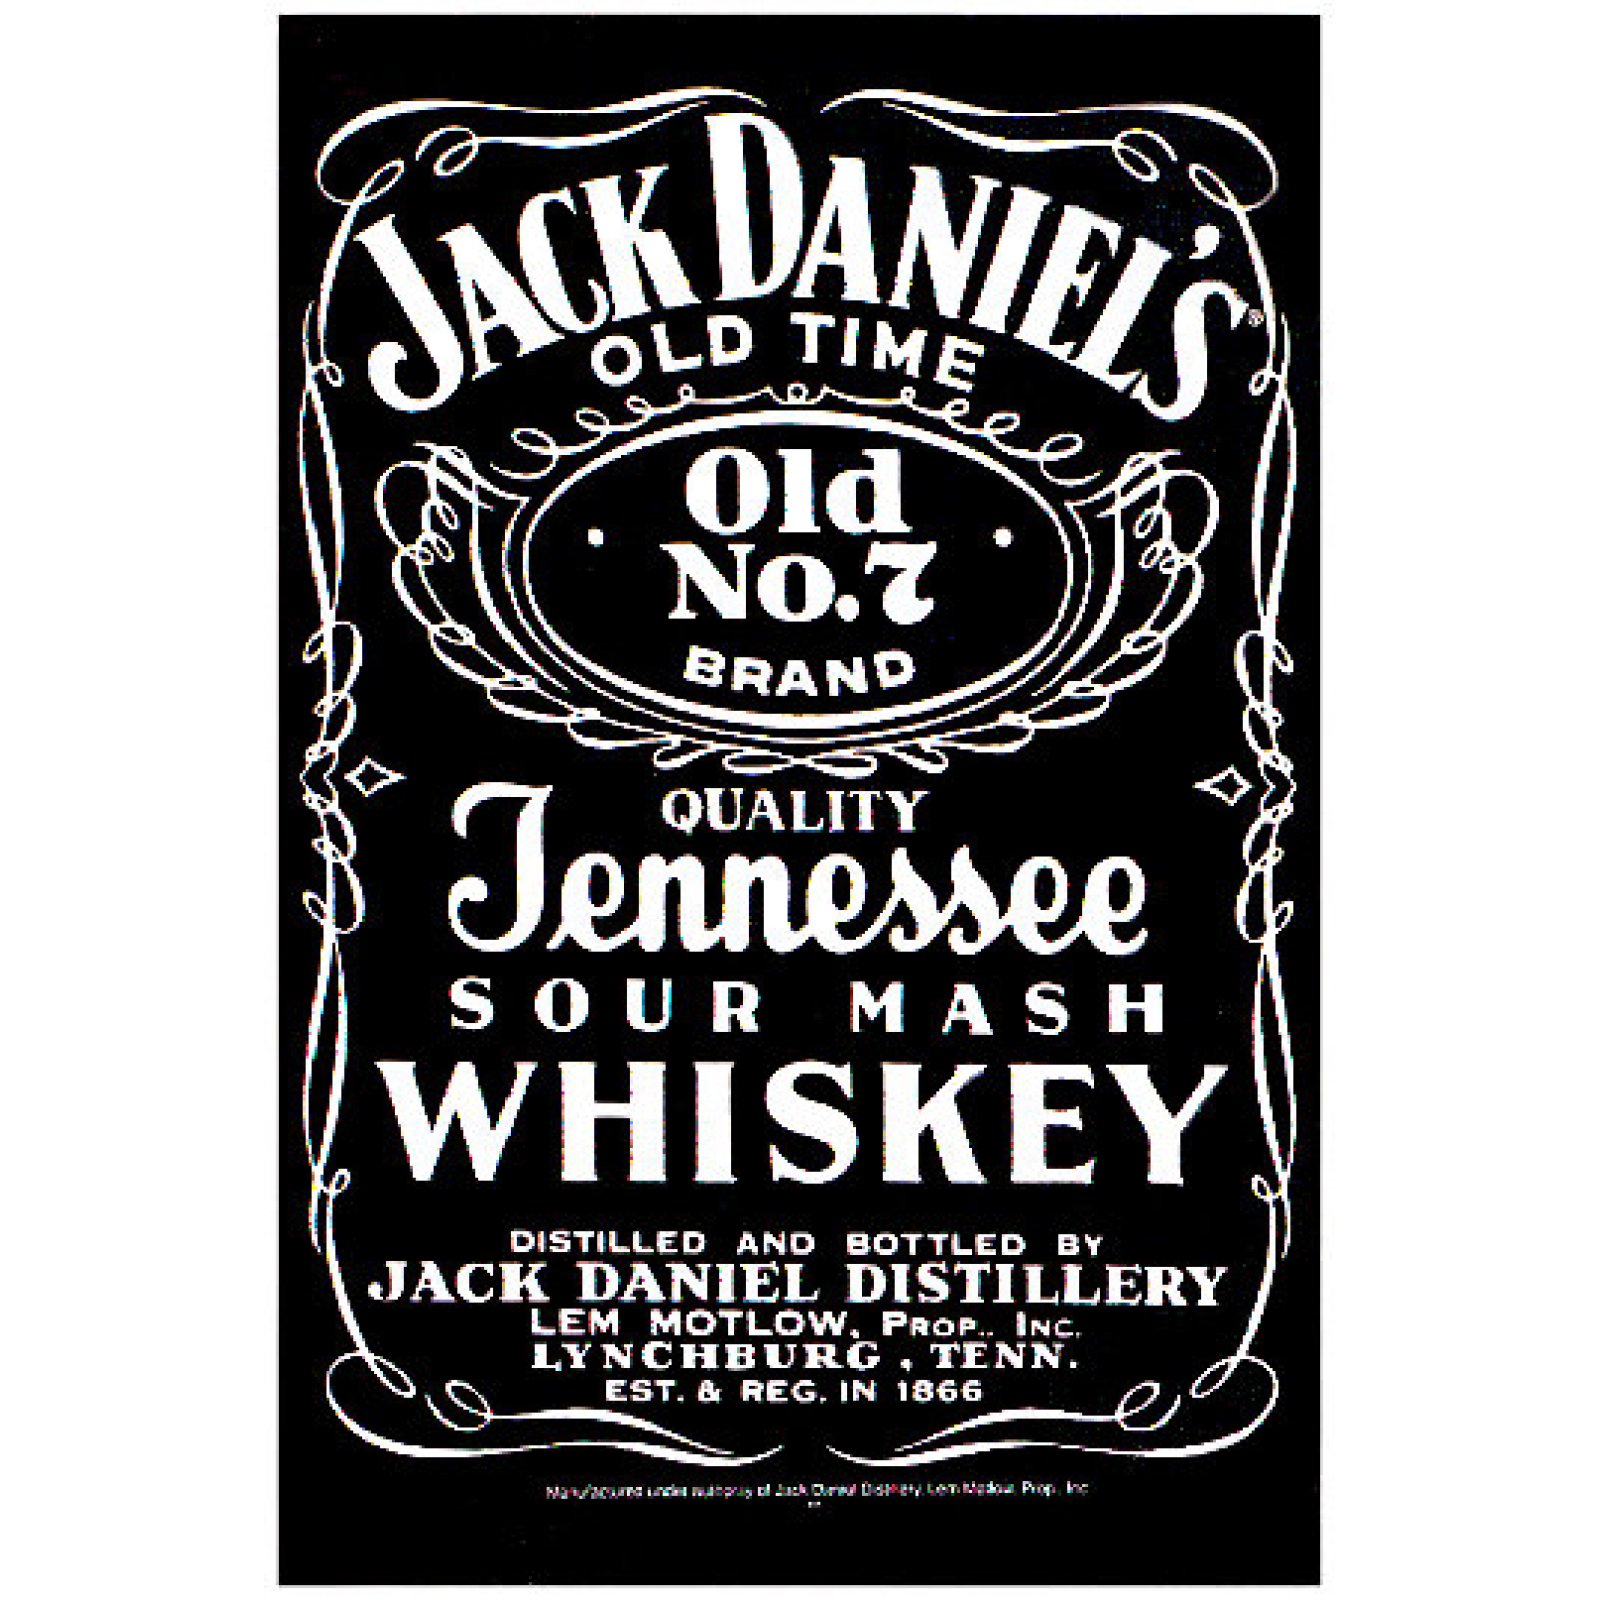 Jack Daniels Logo Template